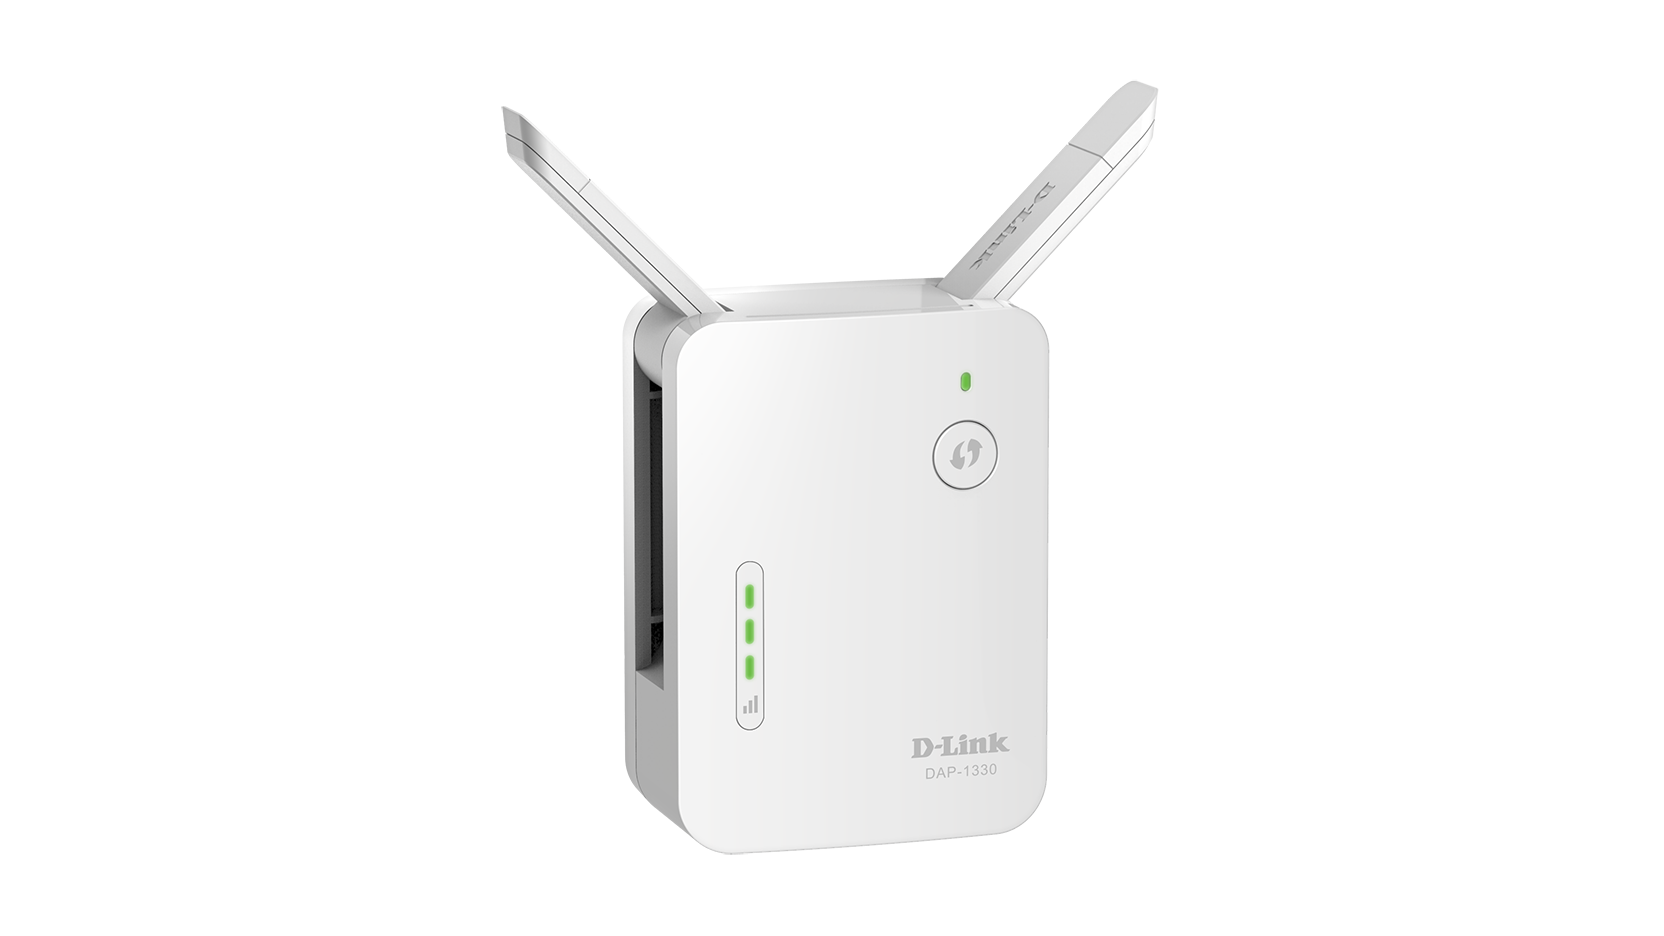 D-Link Wi-Fi Extender N300 DAP-1330 300Mbps